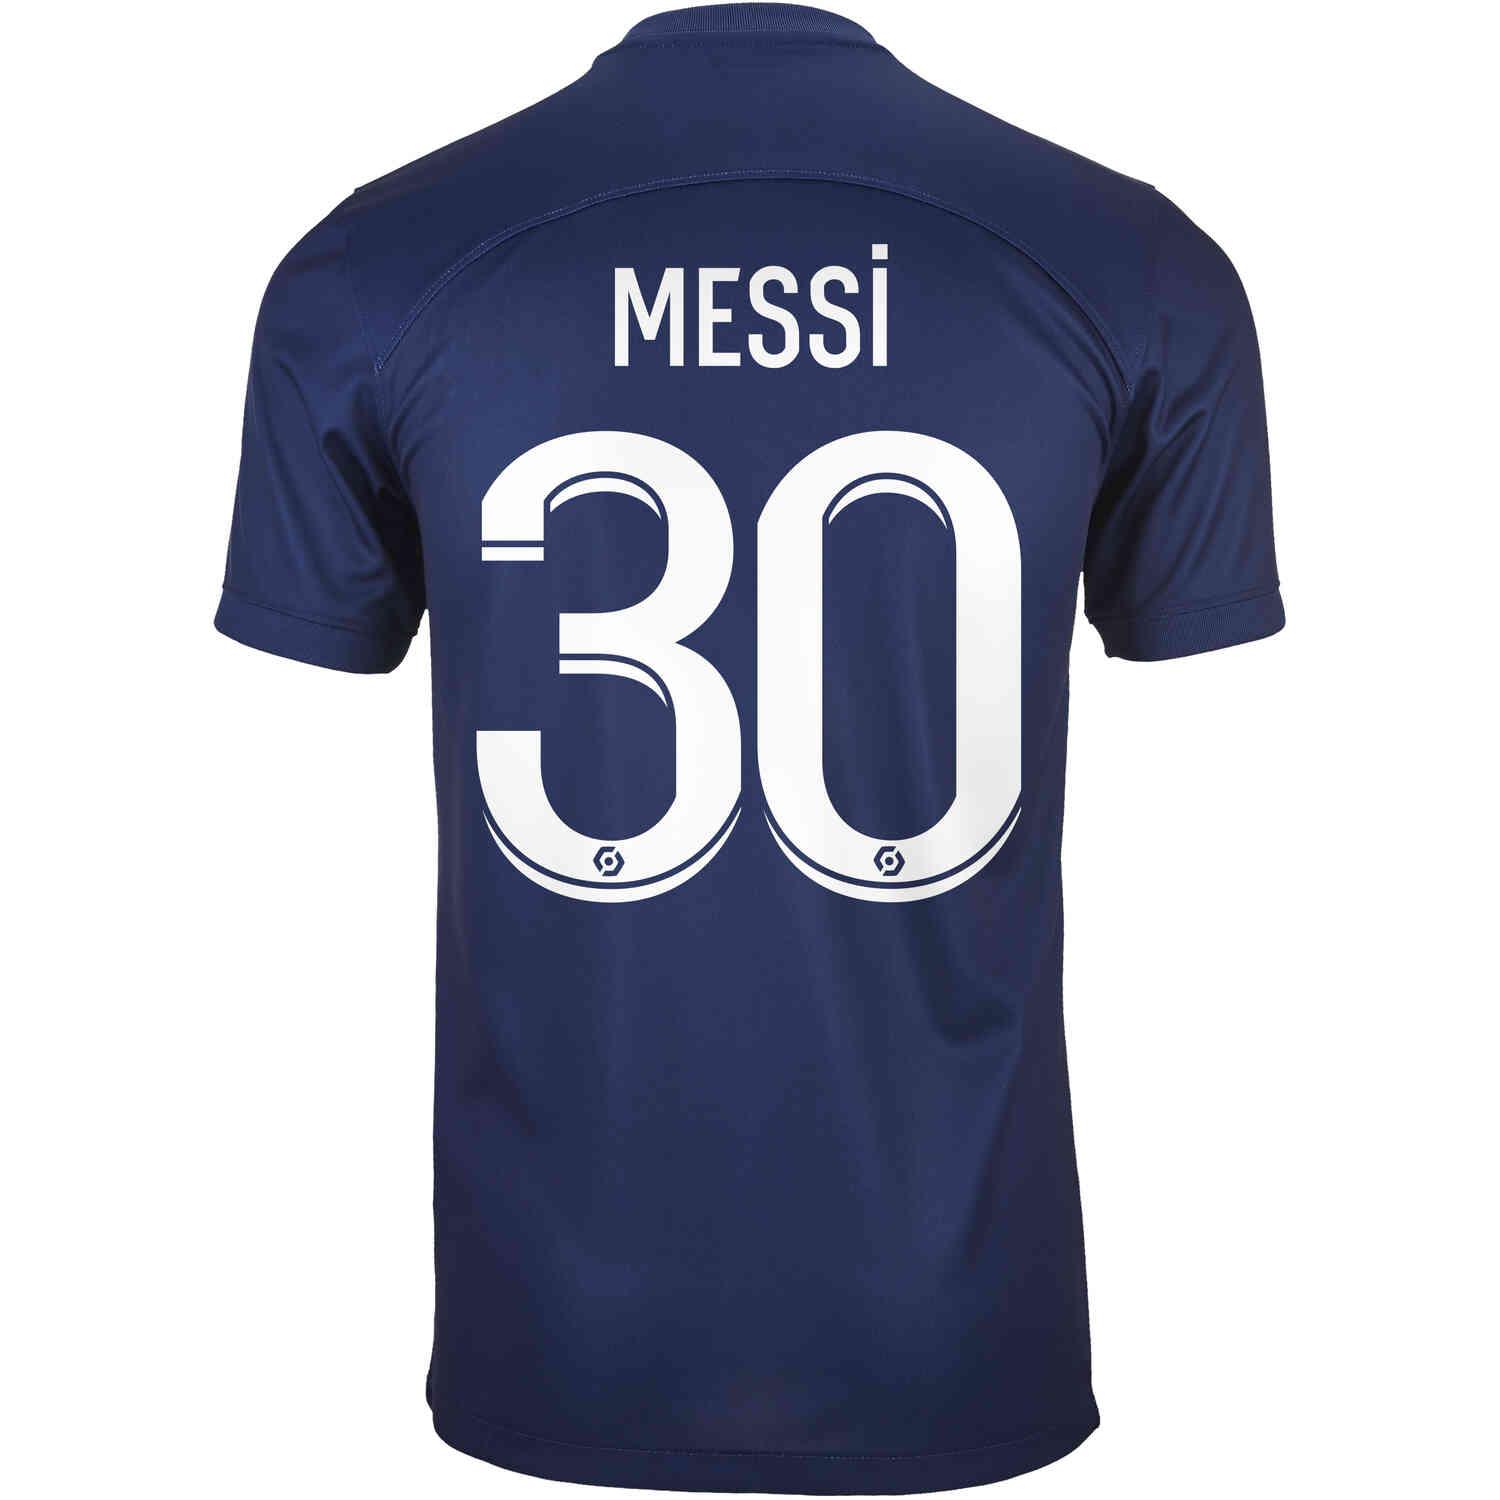 Messi Number 30 Backpacks for Sale